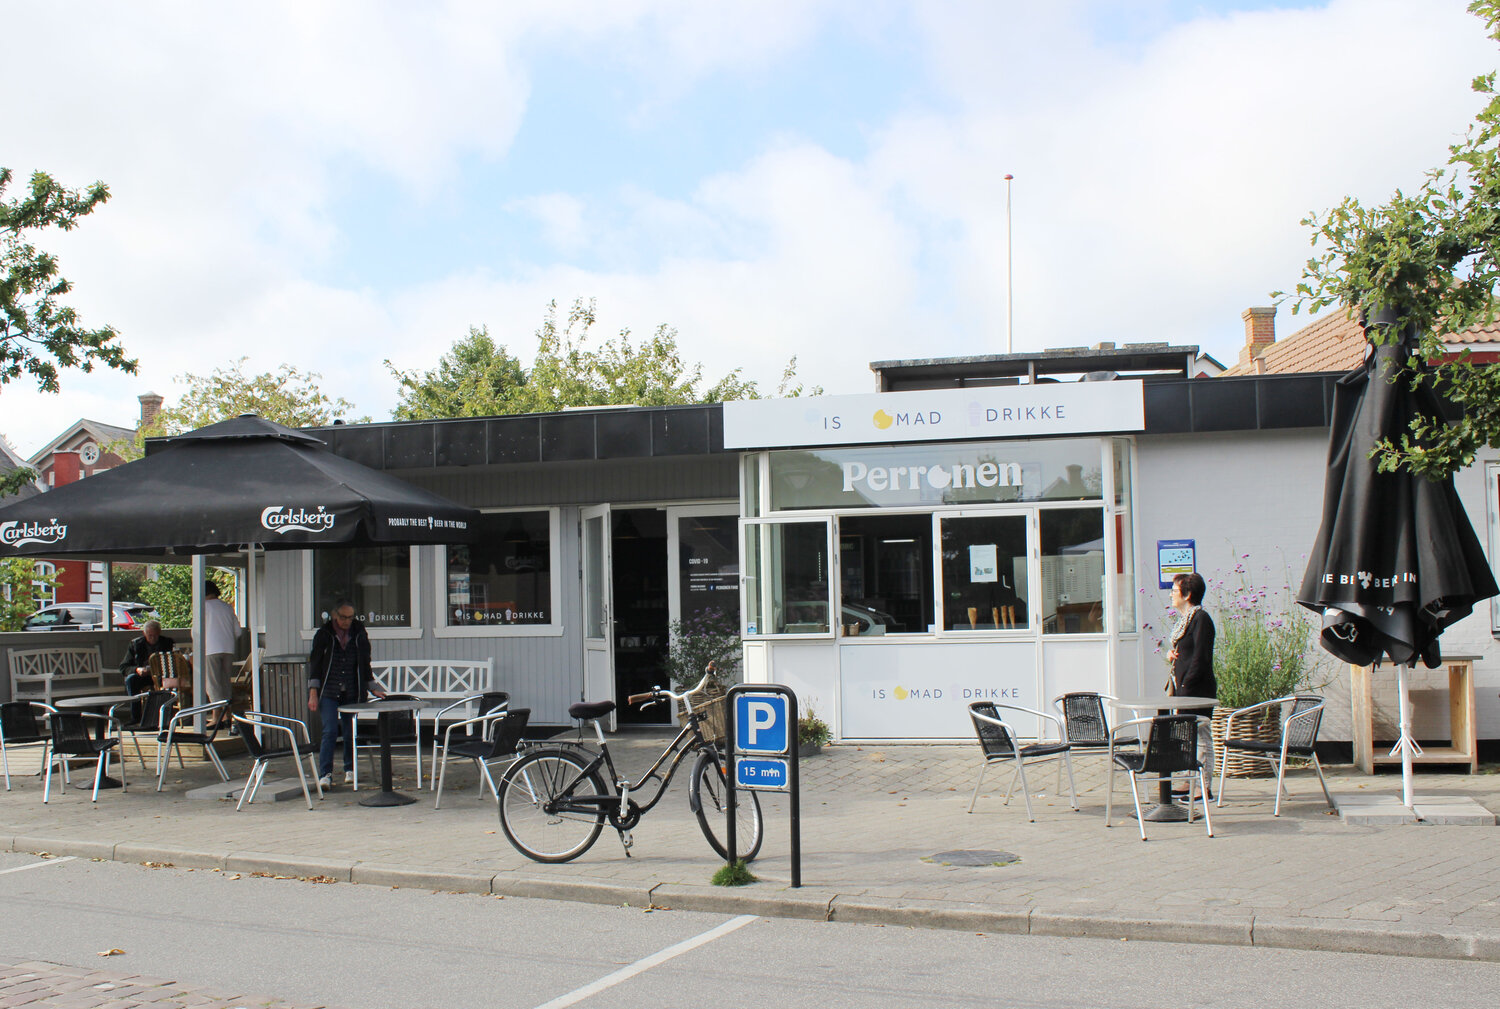 Spisesteder og restauranter i Nordby Fanø — Handelsstandsforening